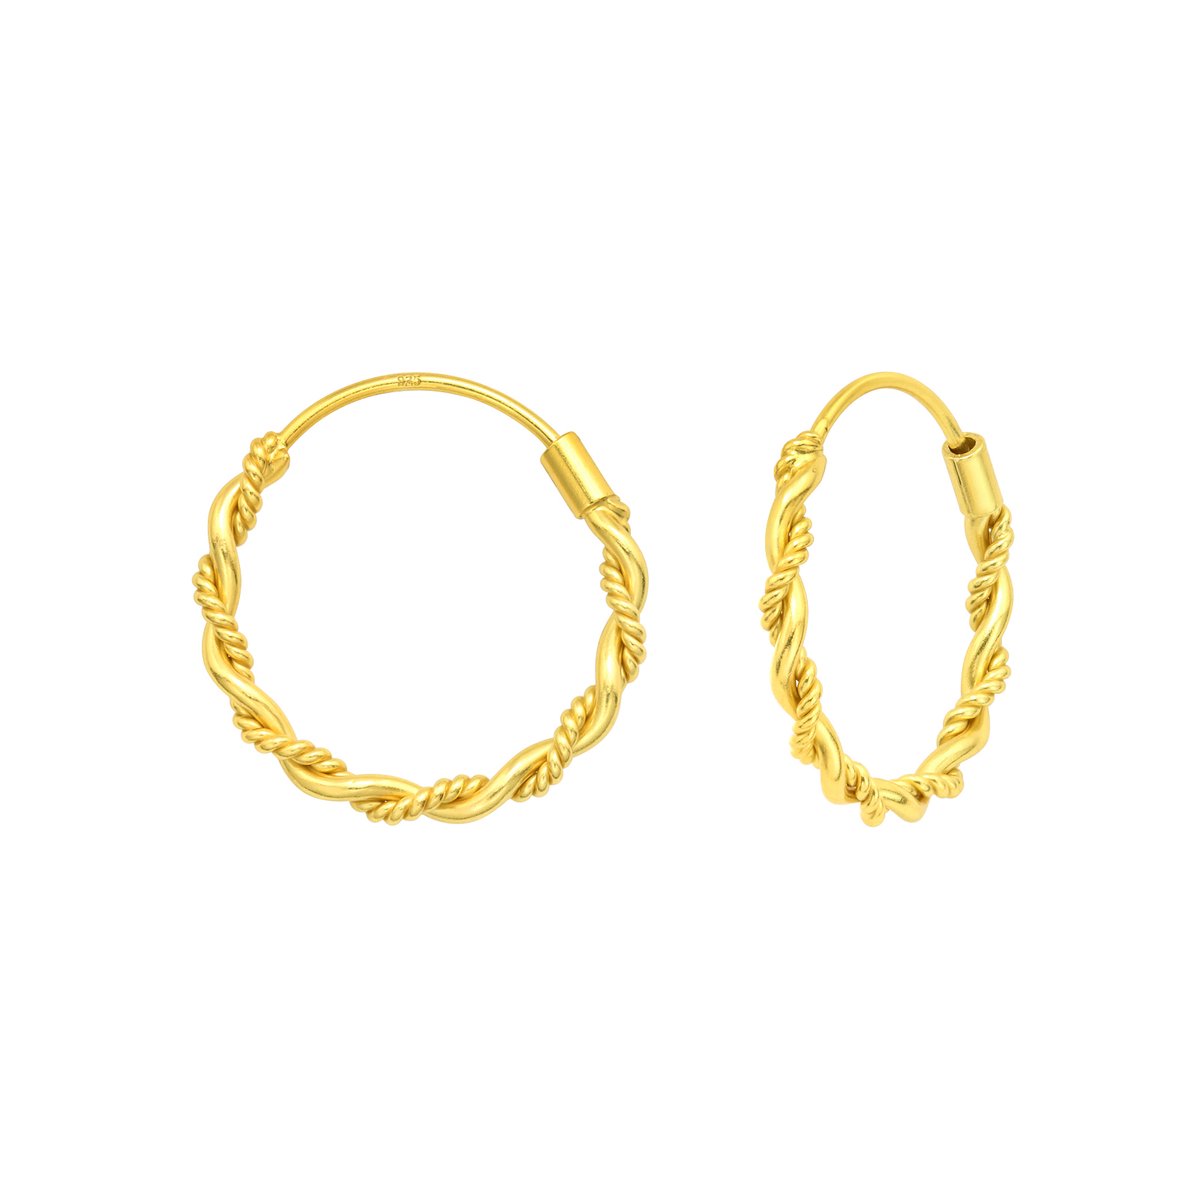 Ringoorbellen ''twisted earrings'' gold plated on 925 sterling silver, 16mm